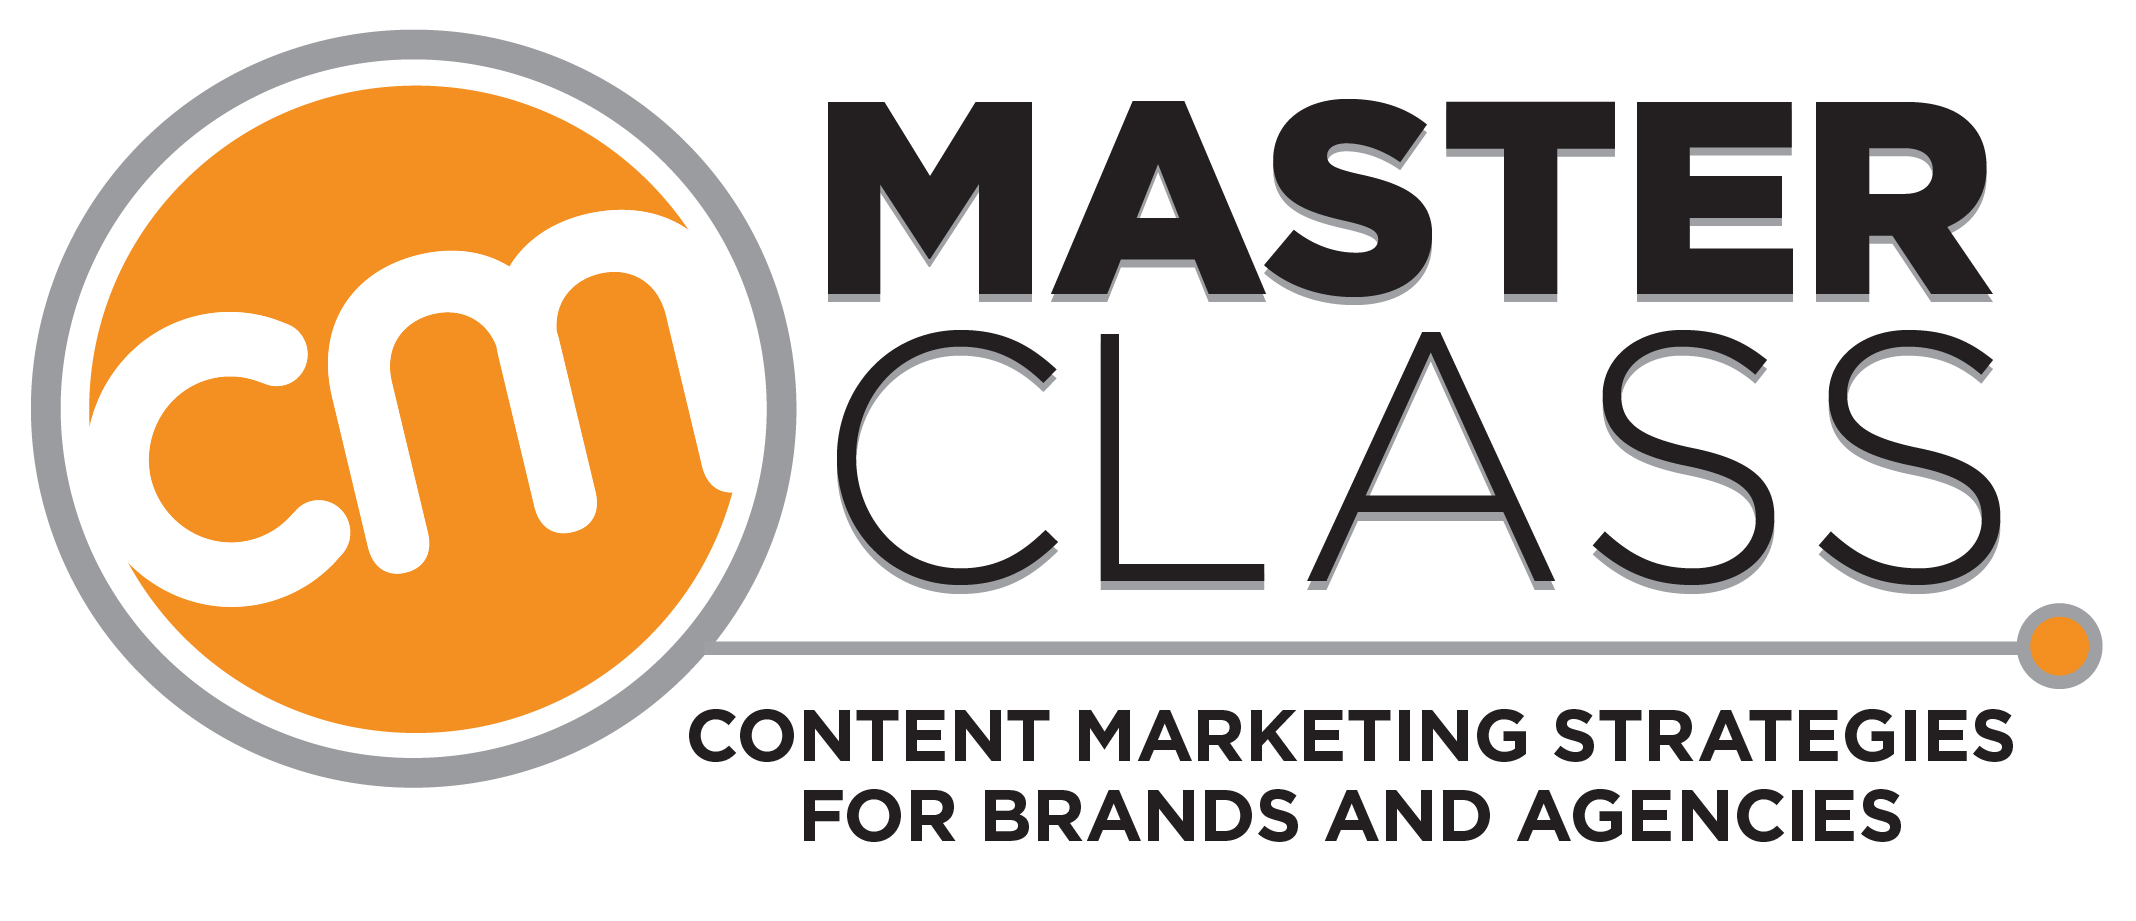 Content Marketing Institute’s Master Class Certification